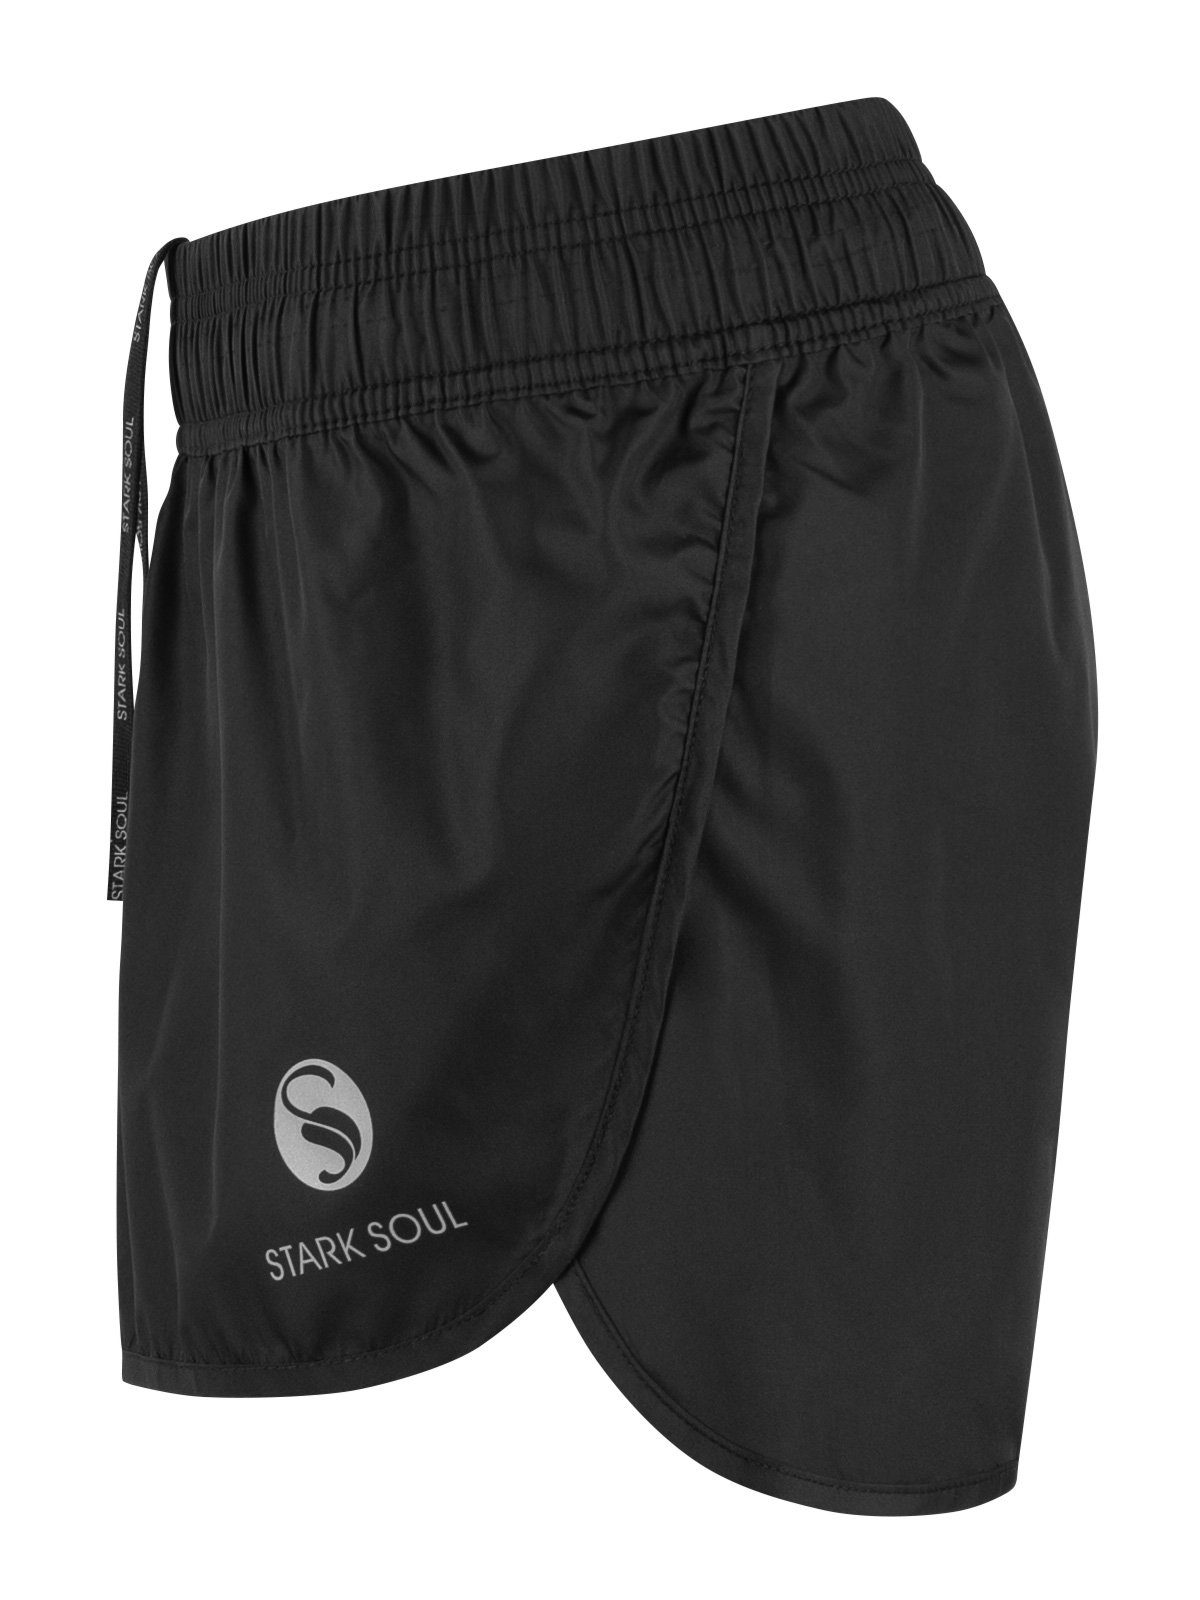 Schnelltrocknend Sporthose Schwarz Dry Quick - aus kurze - Short Material Sport Soul® Sporthose Stark